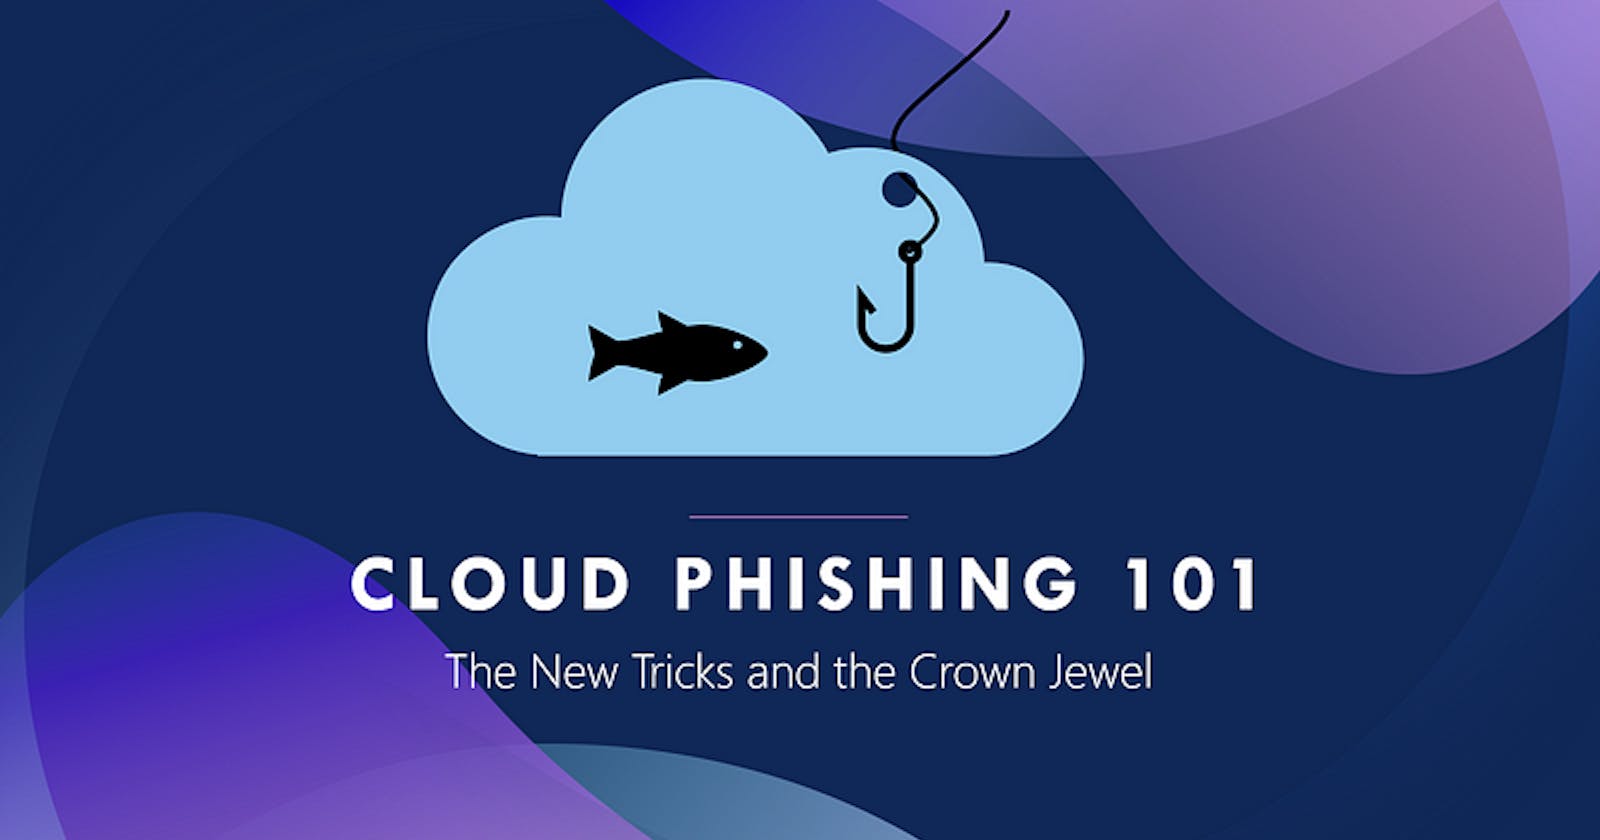 Cloud Phishing: New Tricks and the Crown Jewel